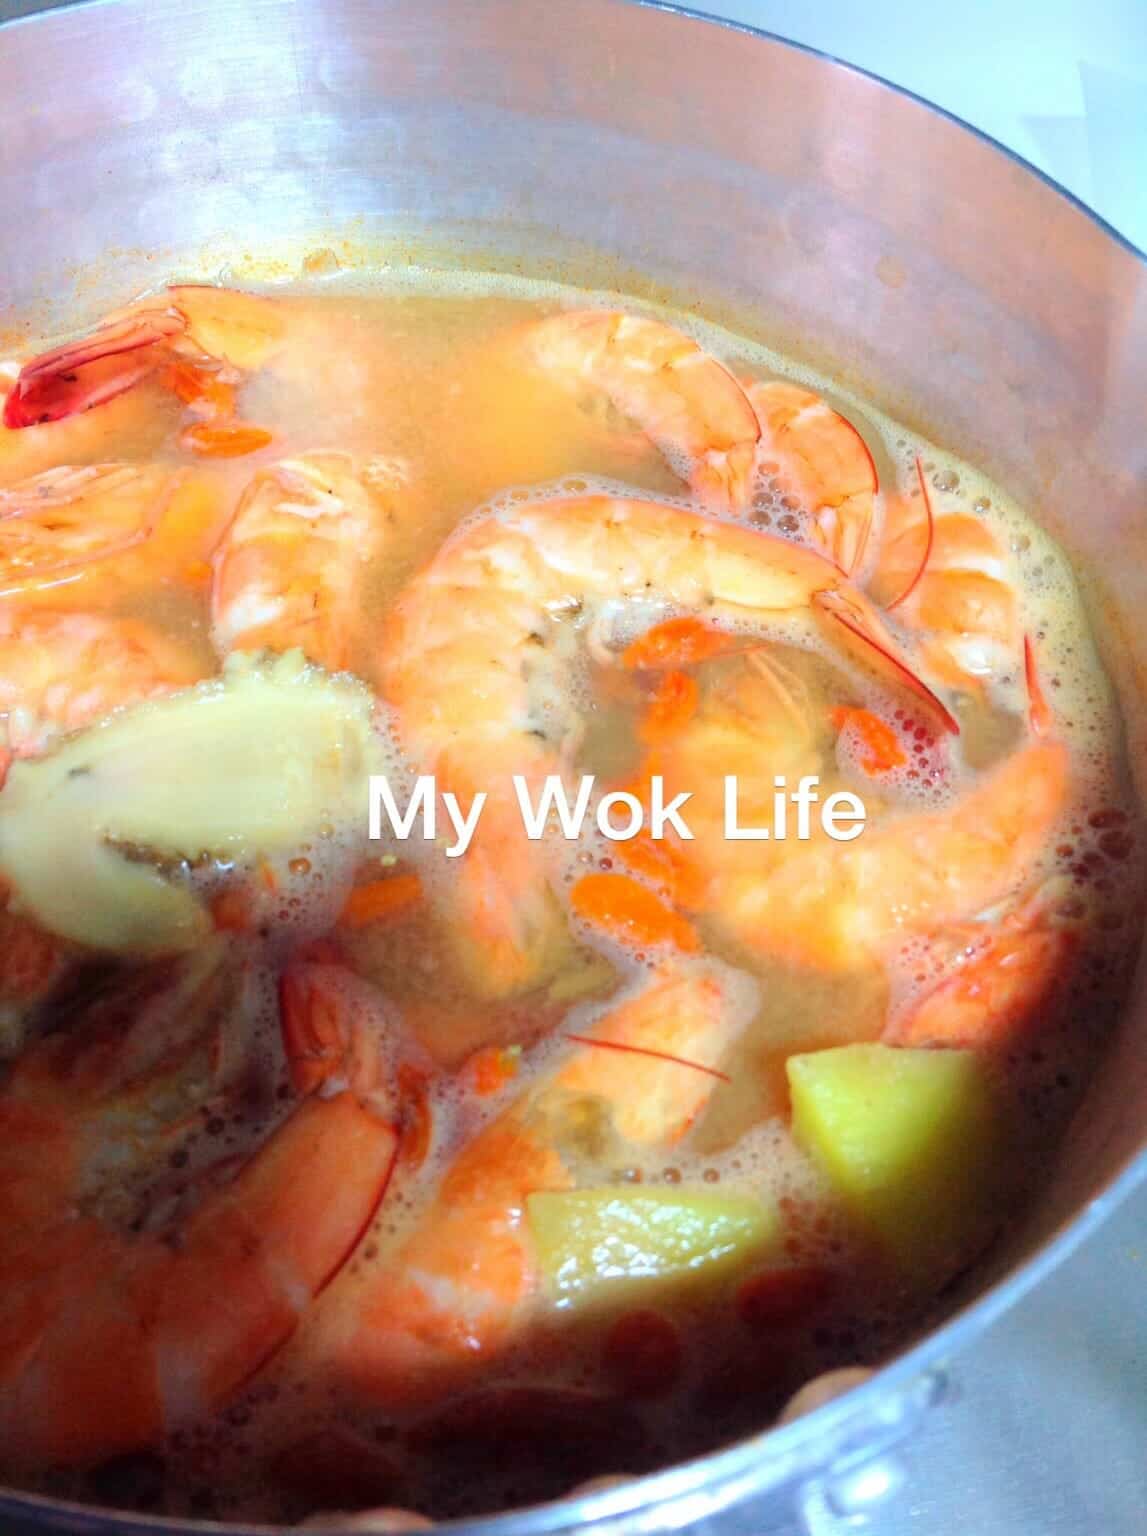 My Wok Life Cooking Blog "Dong Quai" Prawn